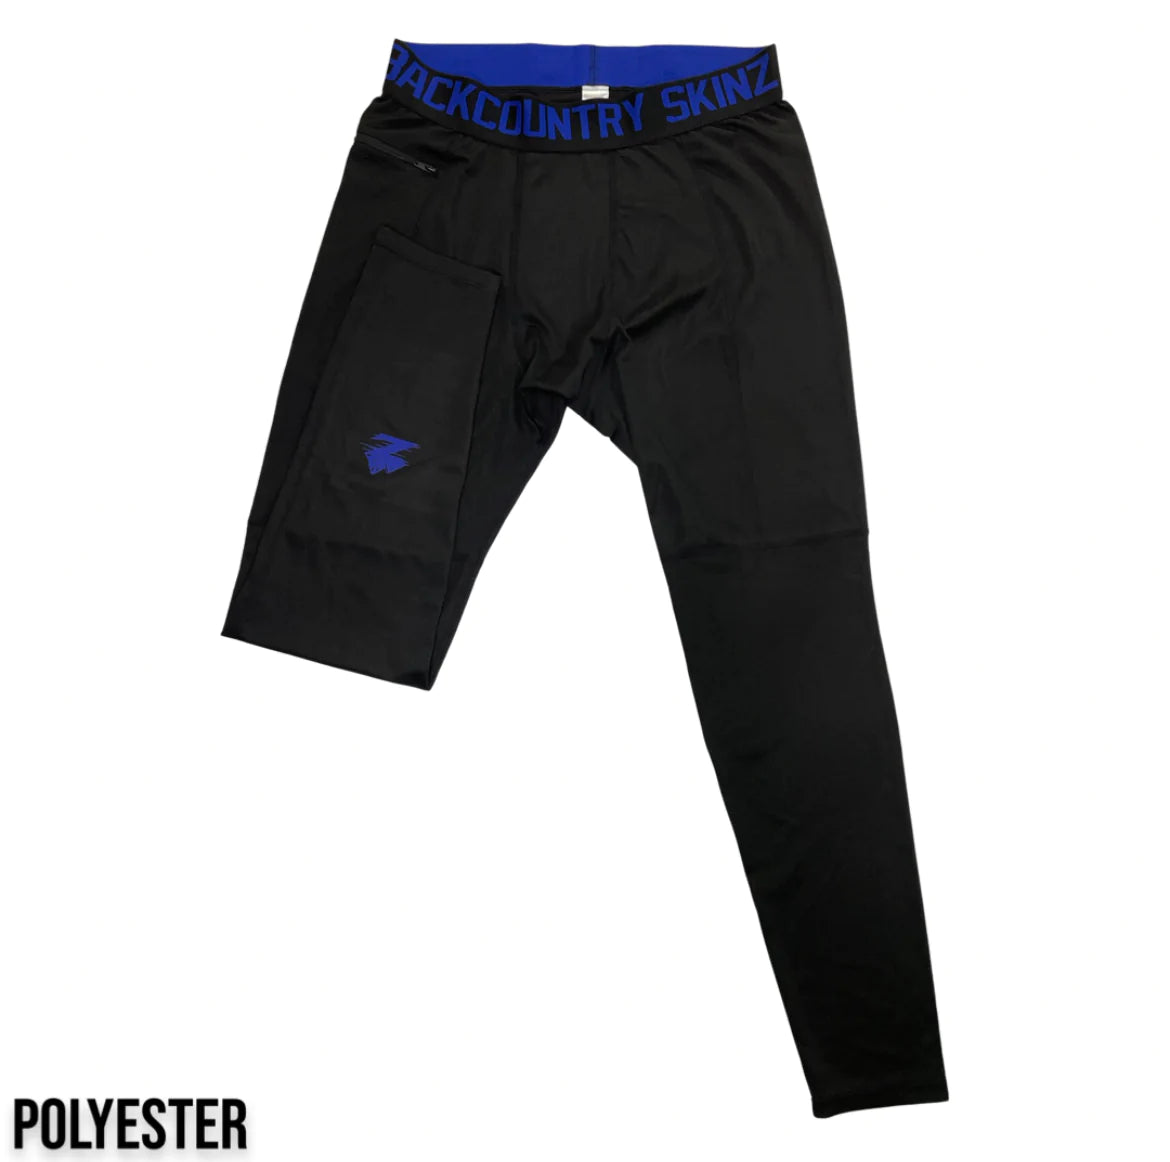 Z Series Men's Polyester Compression Pant